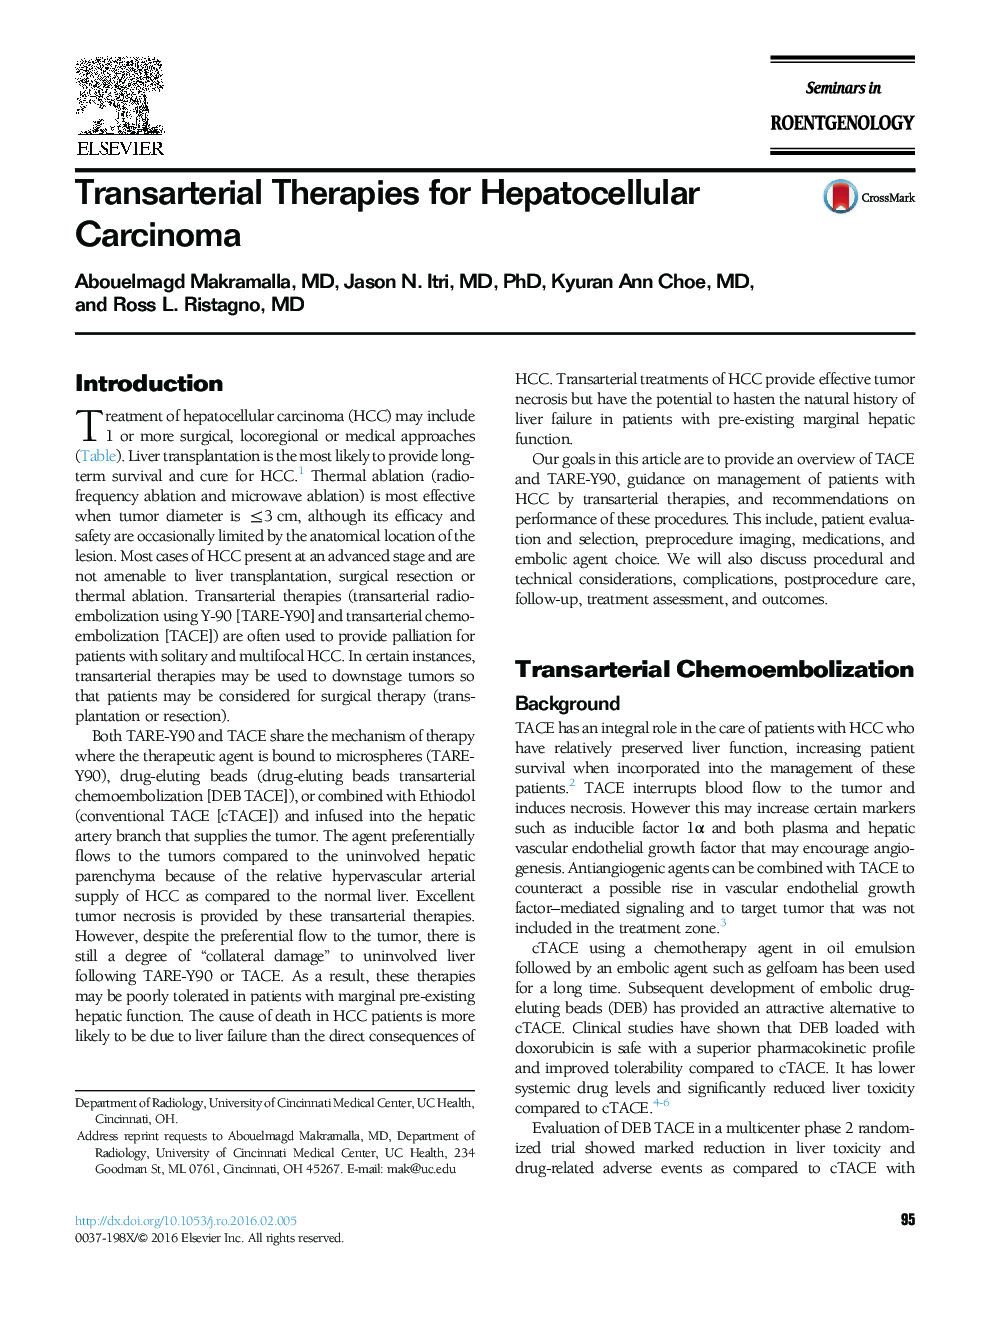 Transarterial Therapies for Hepatocellular Carcinoma